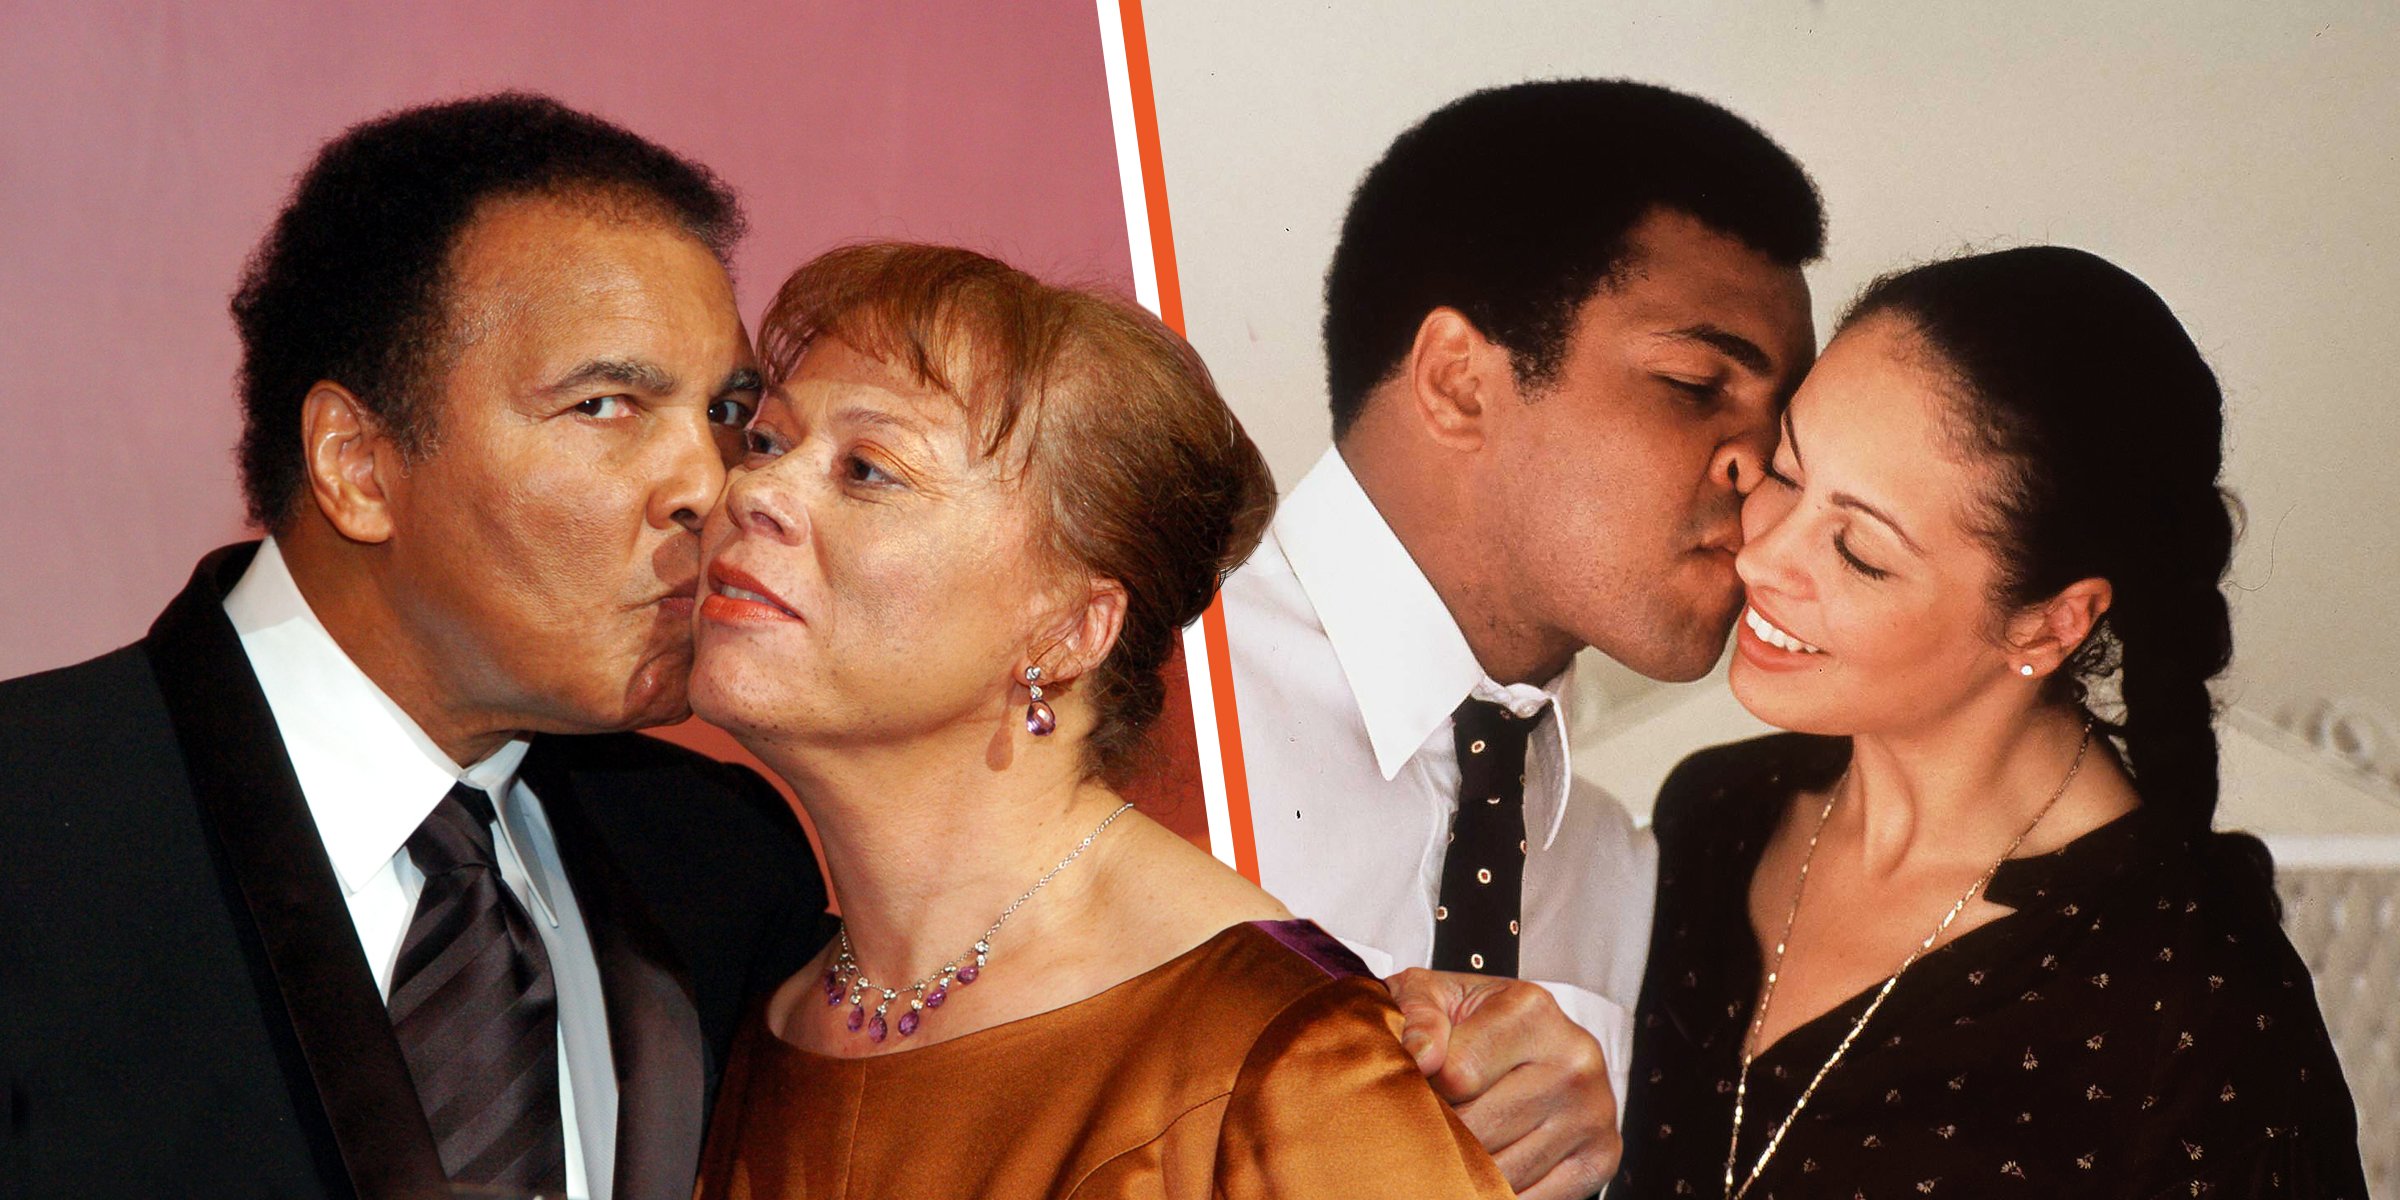 Muhammad Ali and Lonnie Ali | Muhammad Ali and Veronica Ali | Source: Getty Images